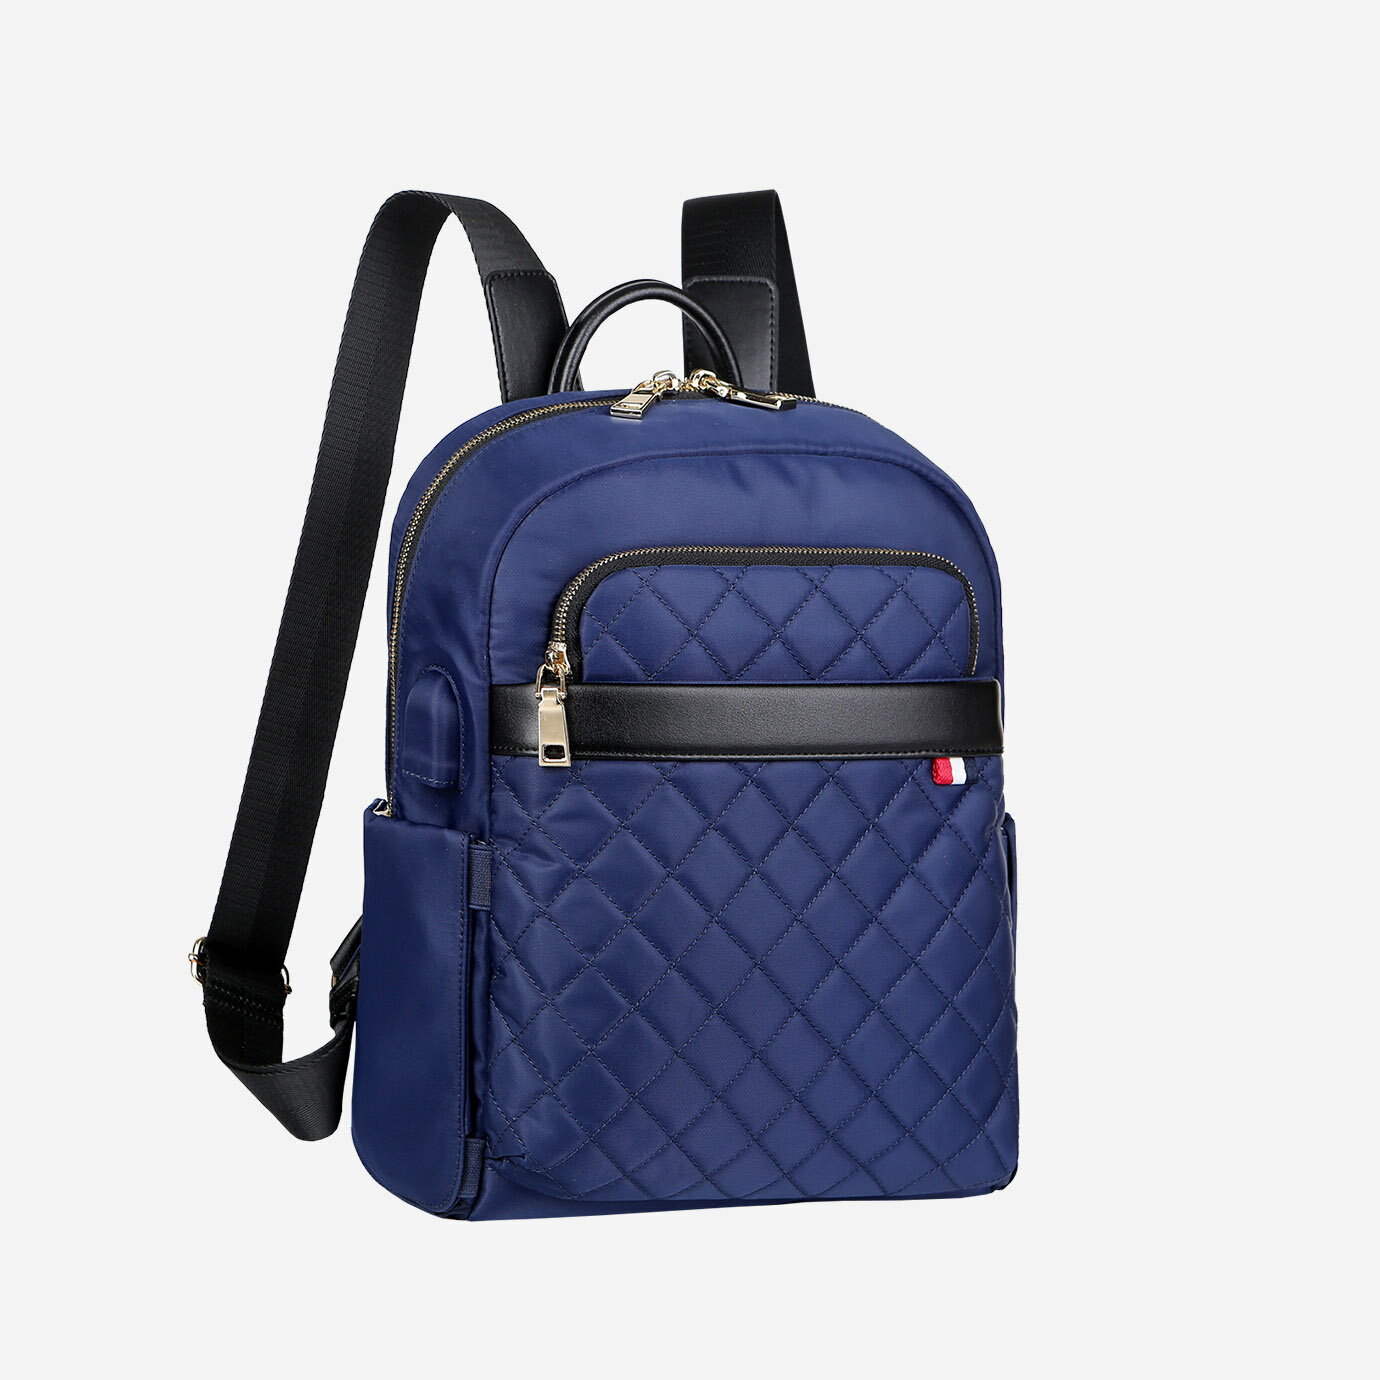 Nordace Ellie Mini- 後背包 充電雙肩包 雙肩包 筆電包 電腦包 旅行包 休閒包 防水背包 7色可選-藍色 3